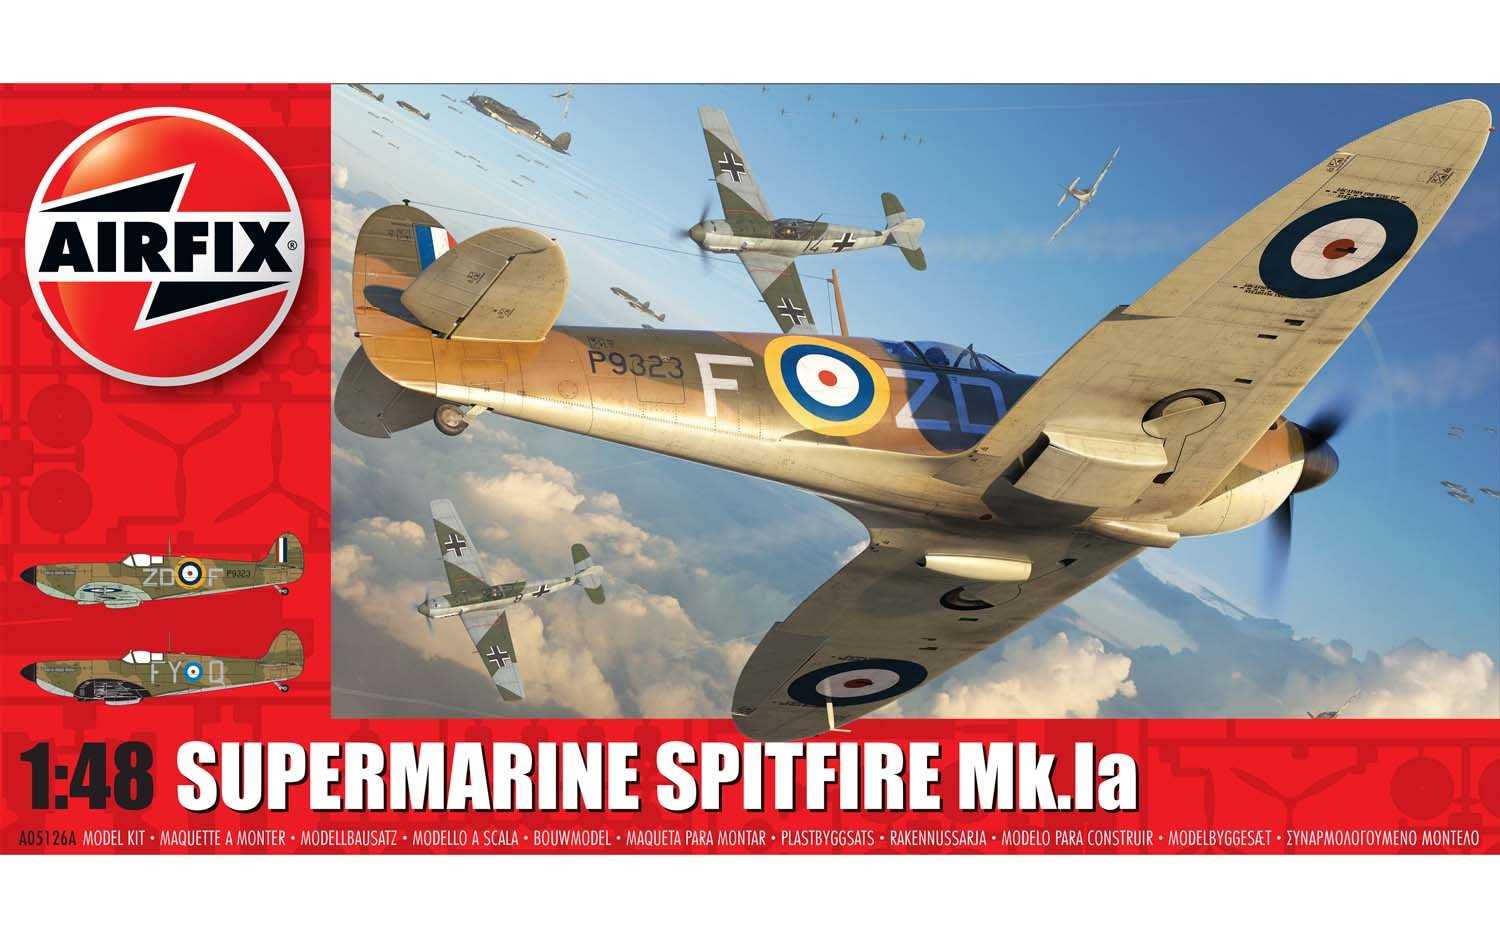 Airfix Classic Kit letadlo A05126A - Supermarine Spitfire Mk.1a (1:48)